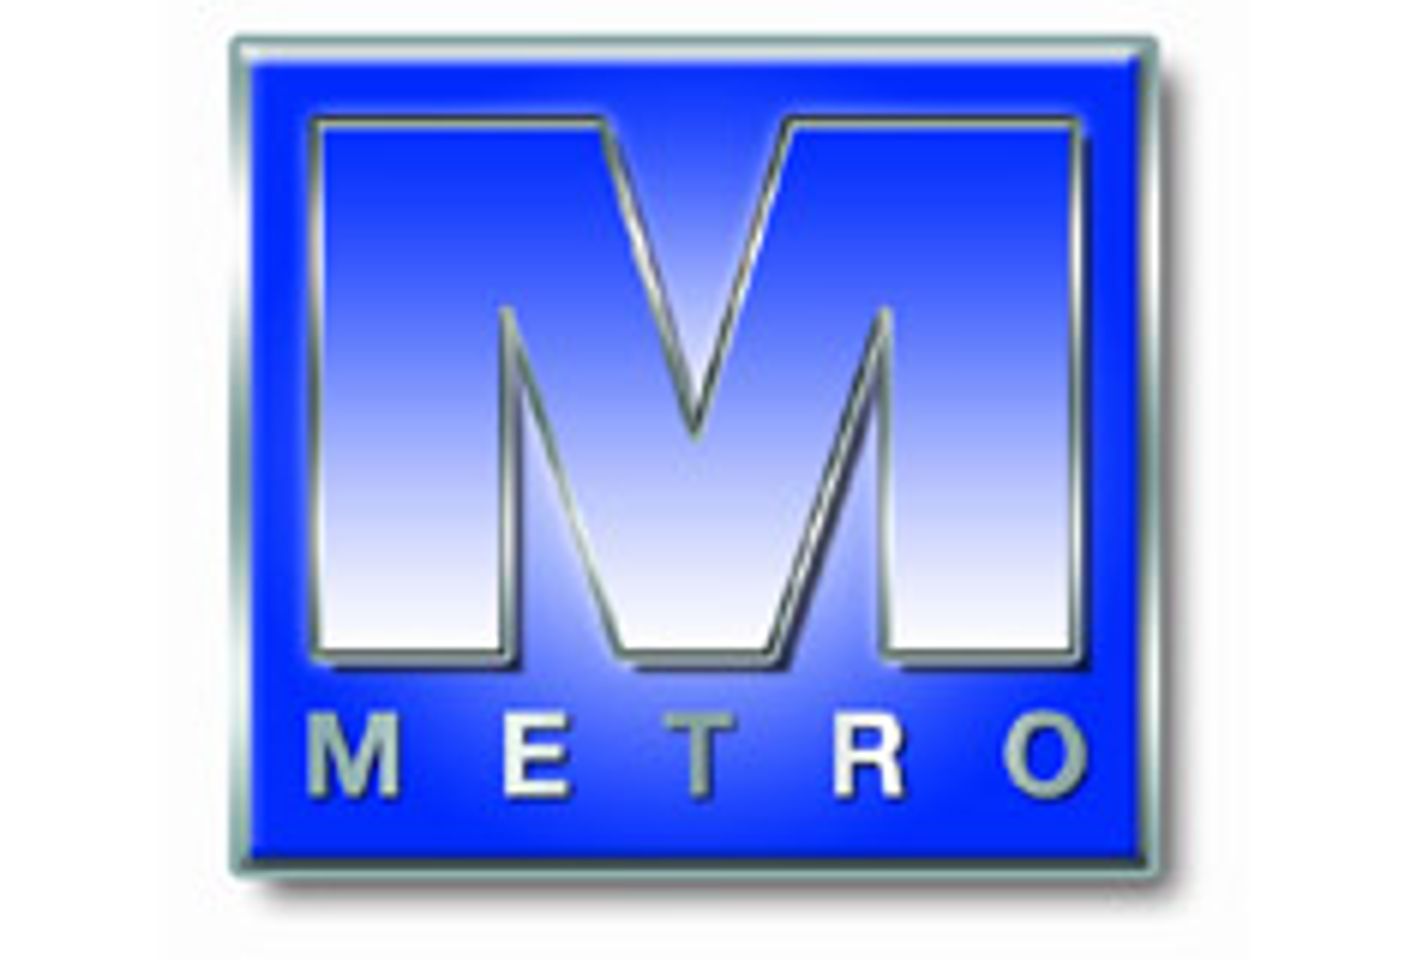 Metro Seeks New Sales Manager